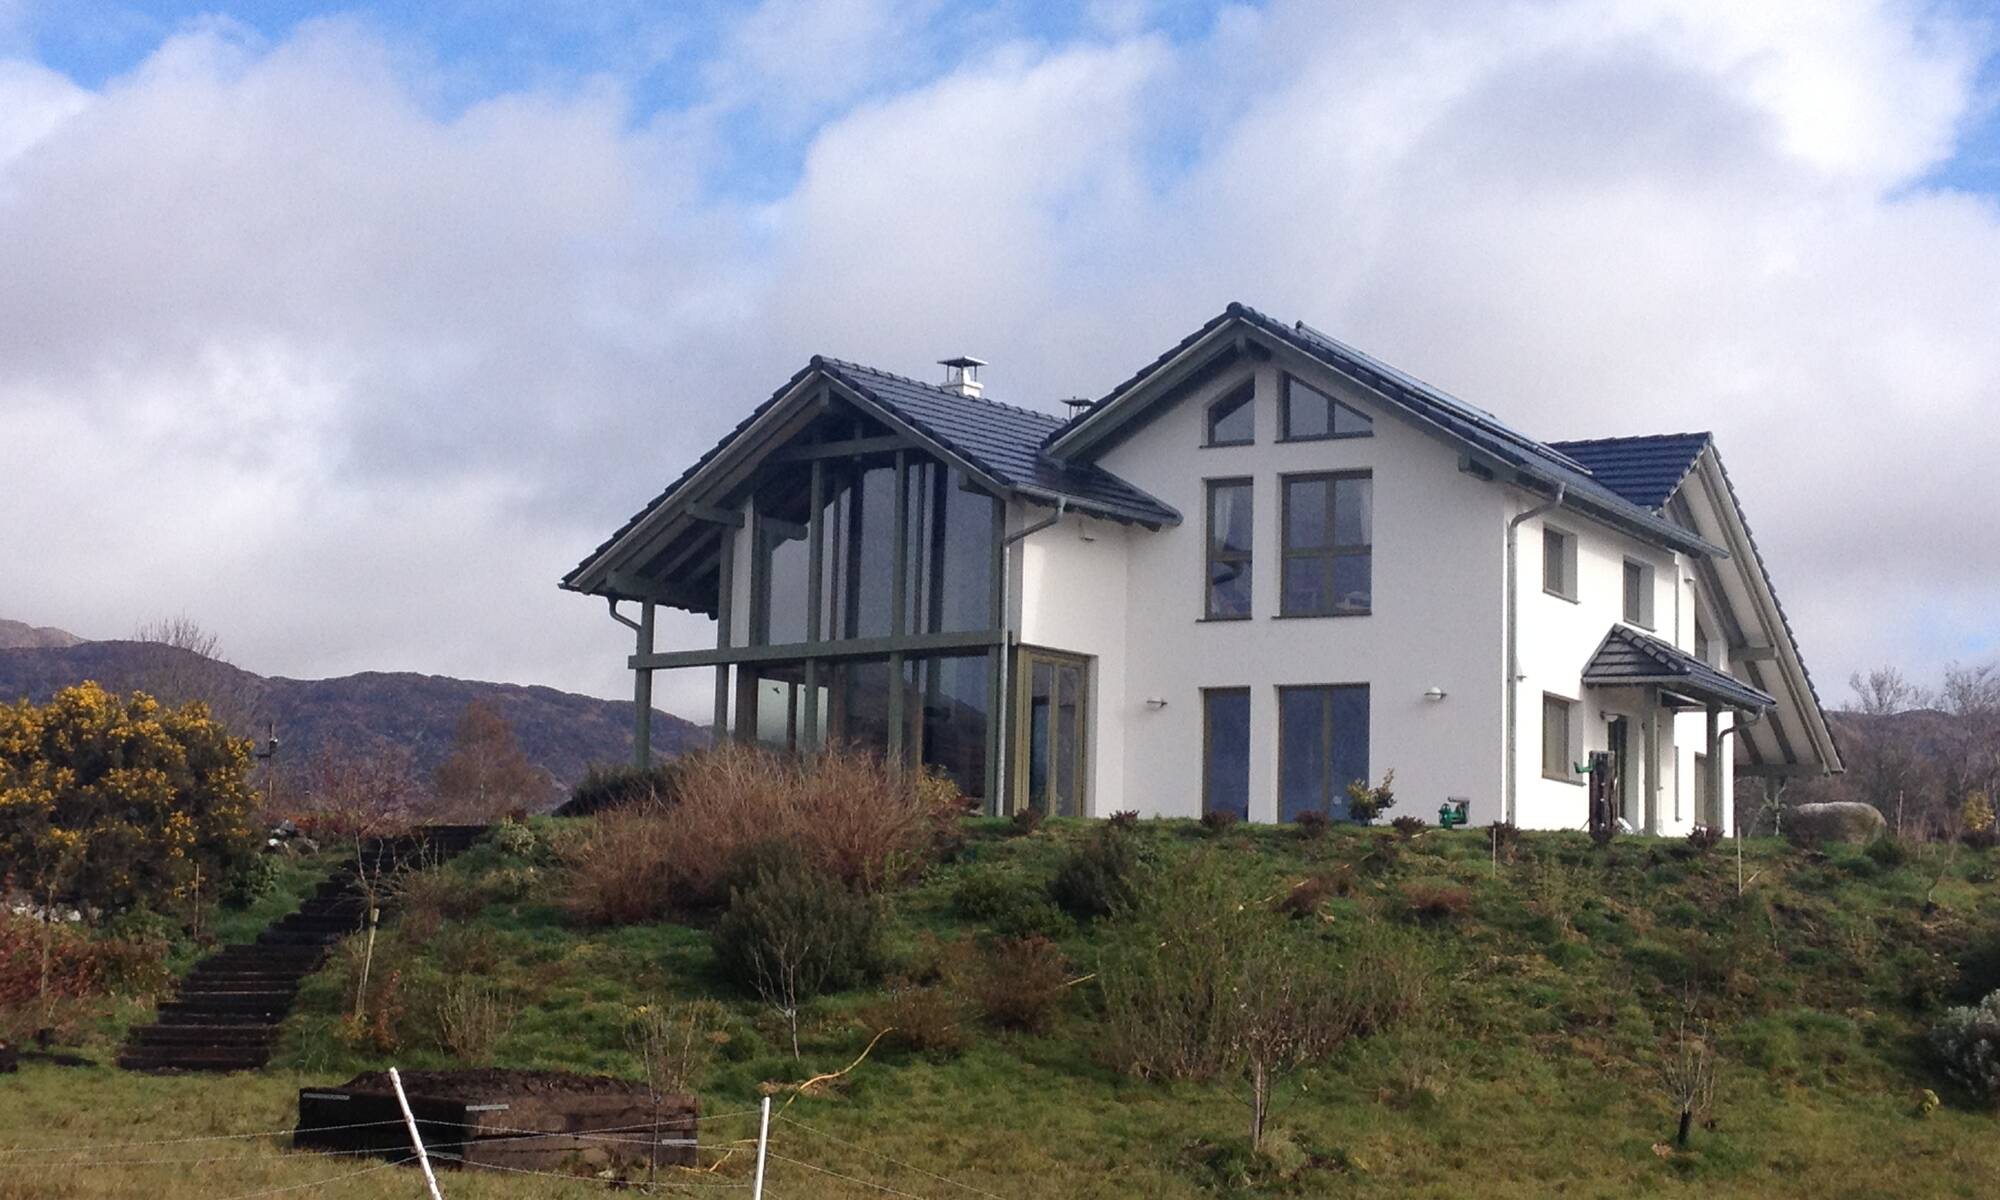 Luxury self-build home in Irish countryside